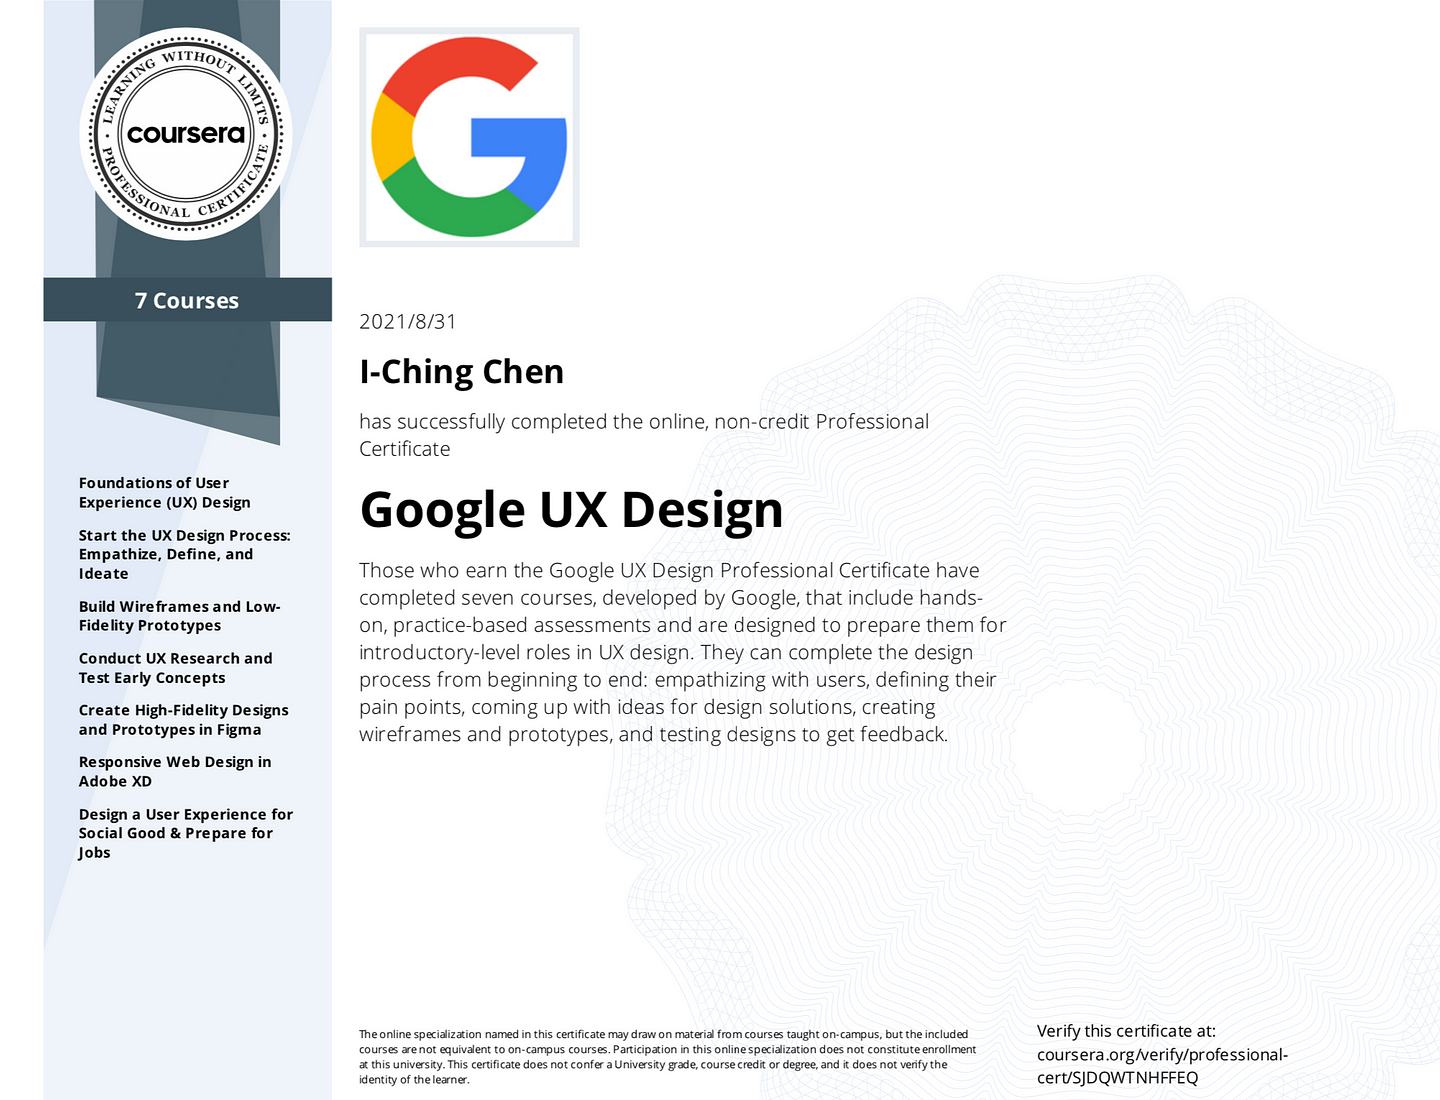 先秀一下兩個禮拜到手的 Google UX Design 課程證書 (From Coursera)